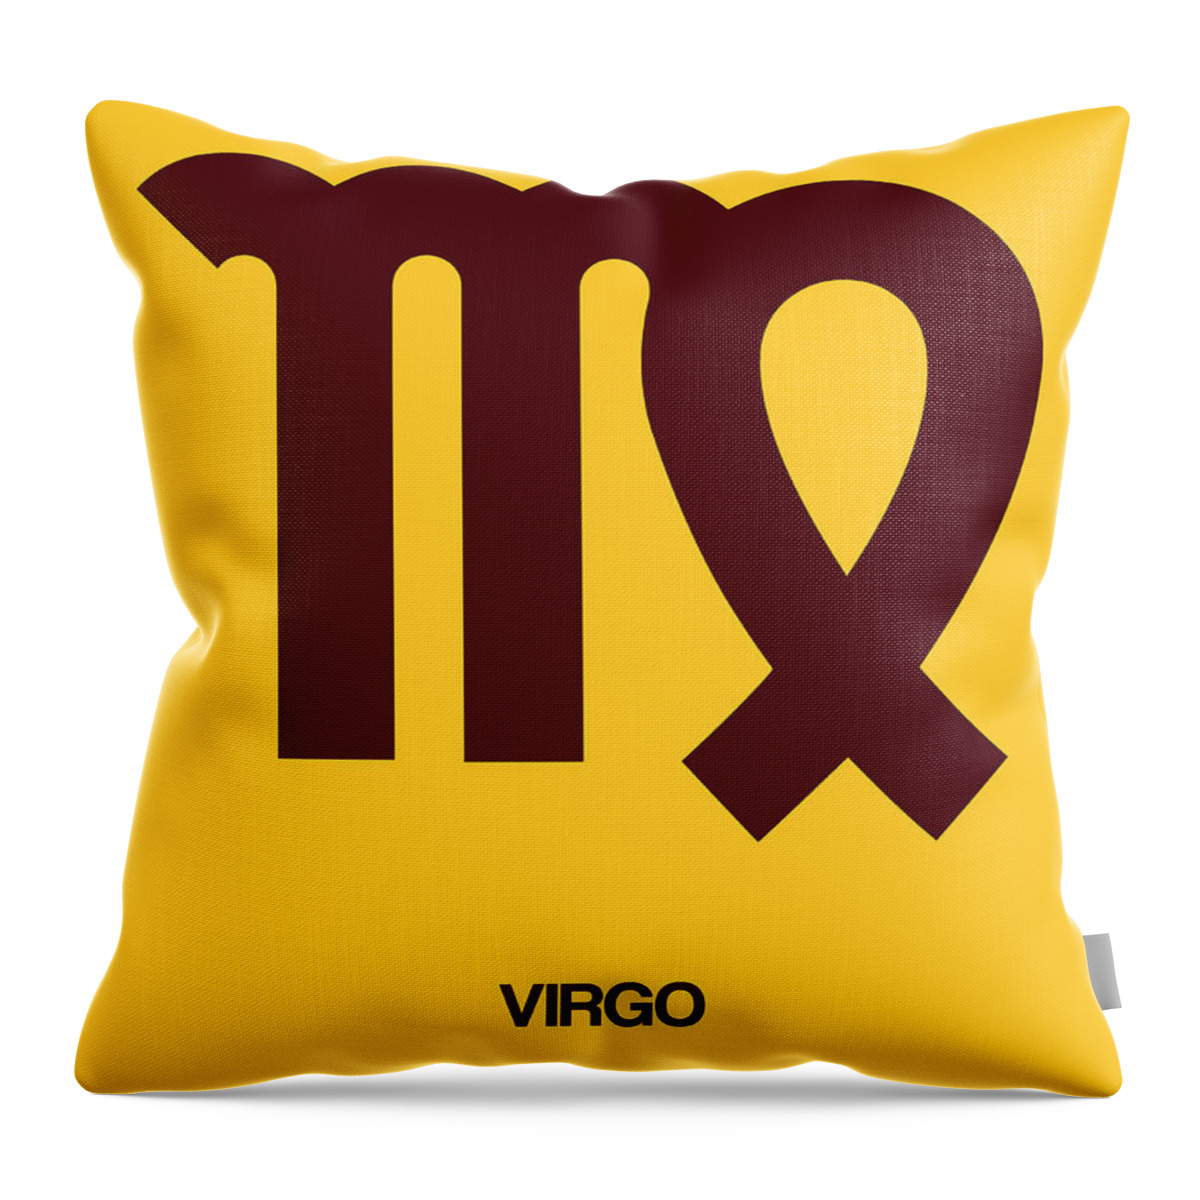 Virgo Throw Pillow featuring the digital art Virgo Zodiac Sign Brown by Naxart Studio